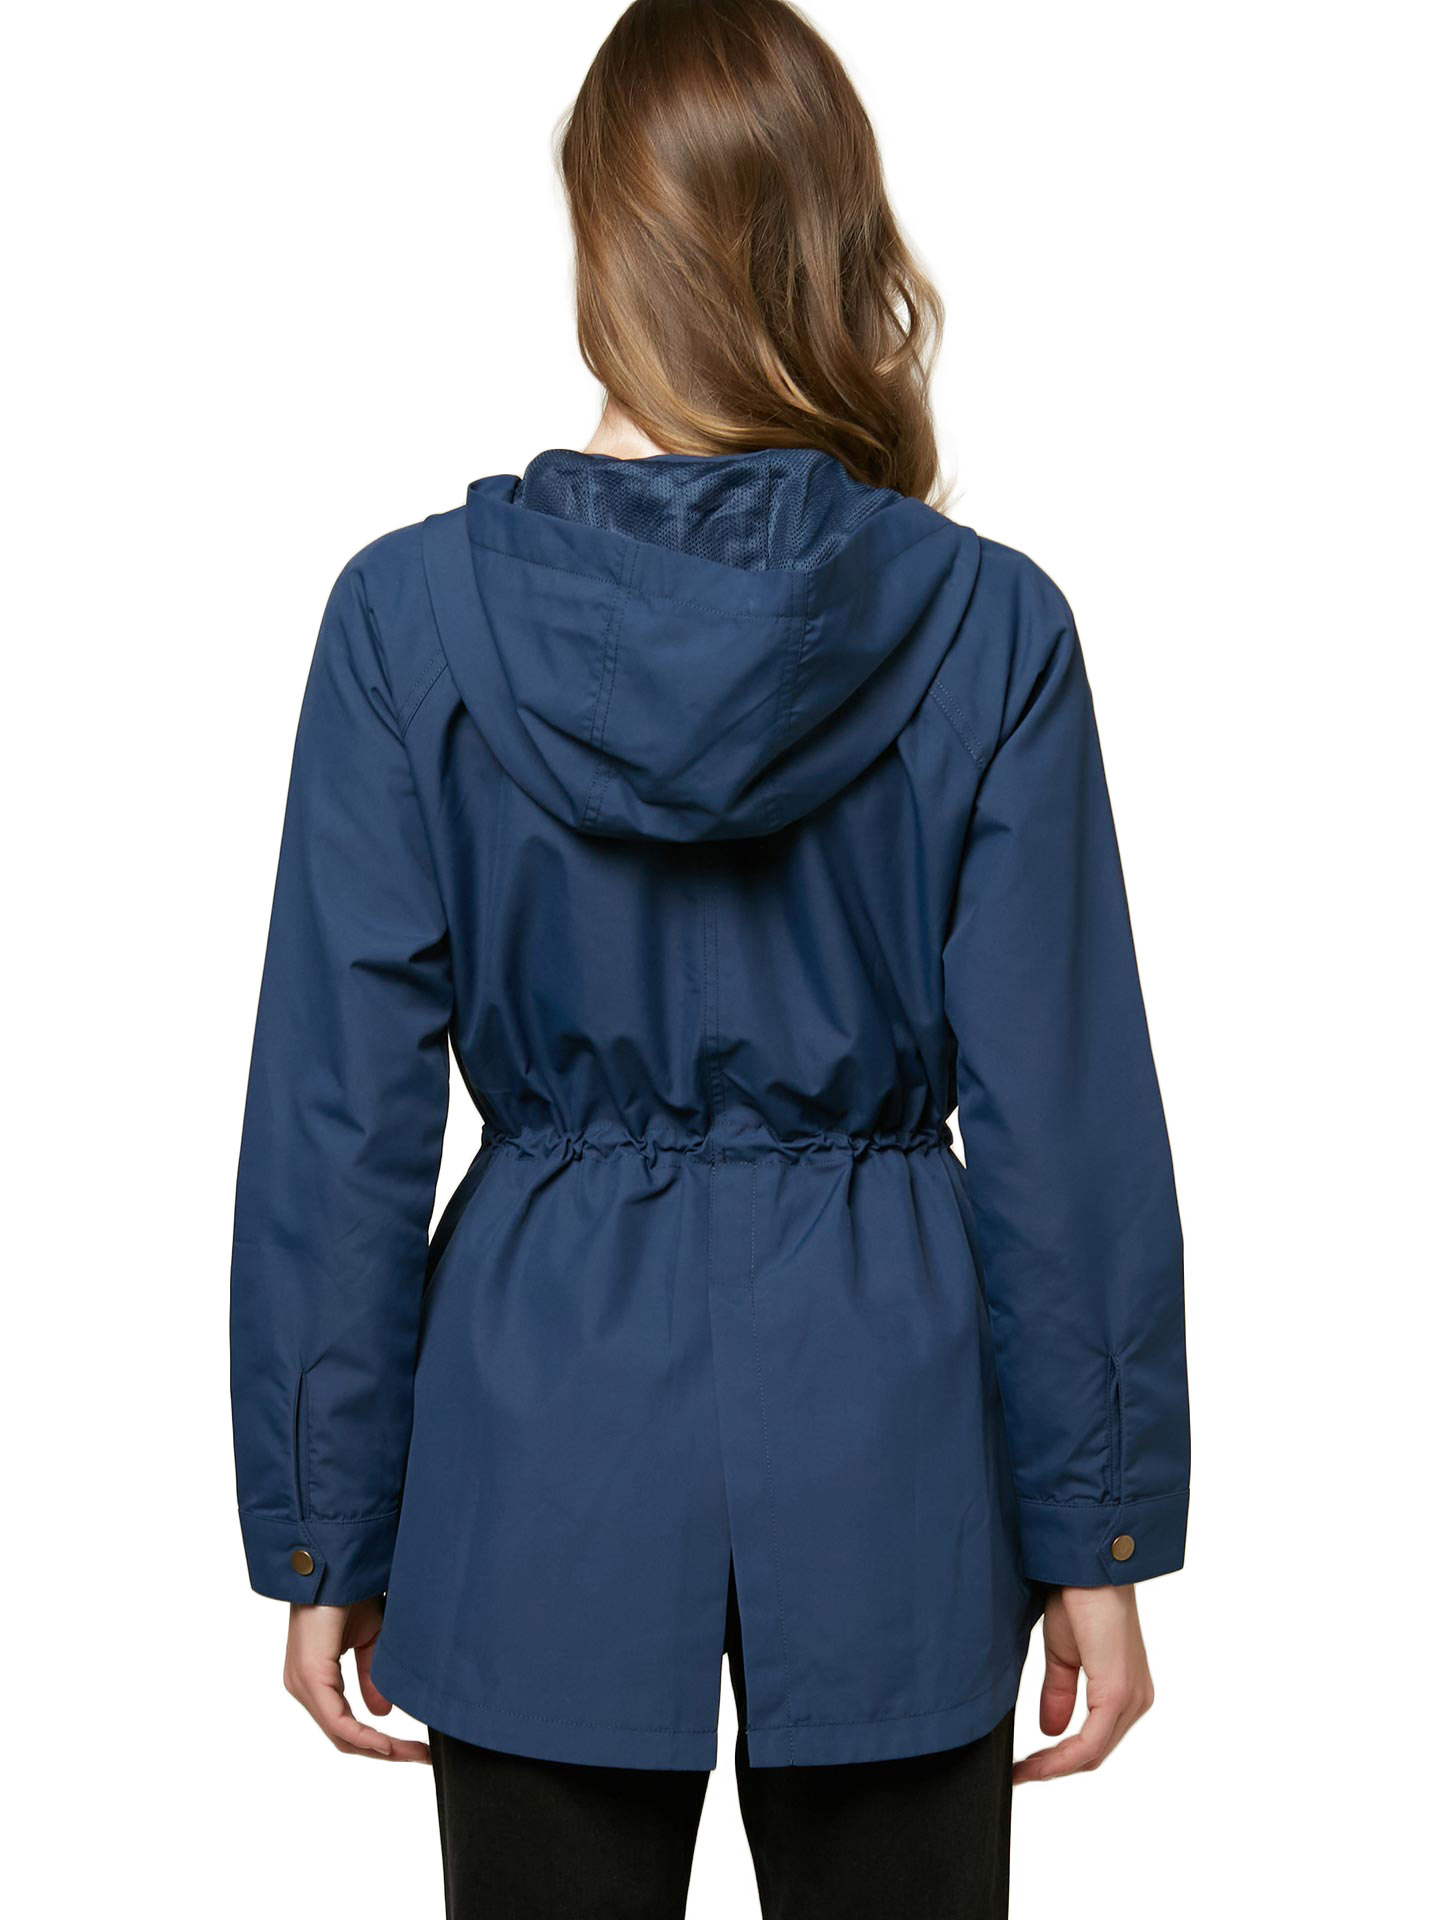 O'Neill Womens Gayle Rain Jacket Insignia blue M - image 4 of 4